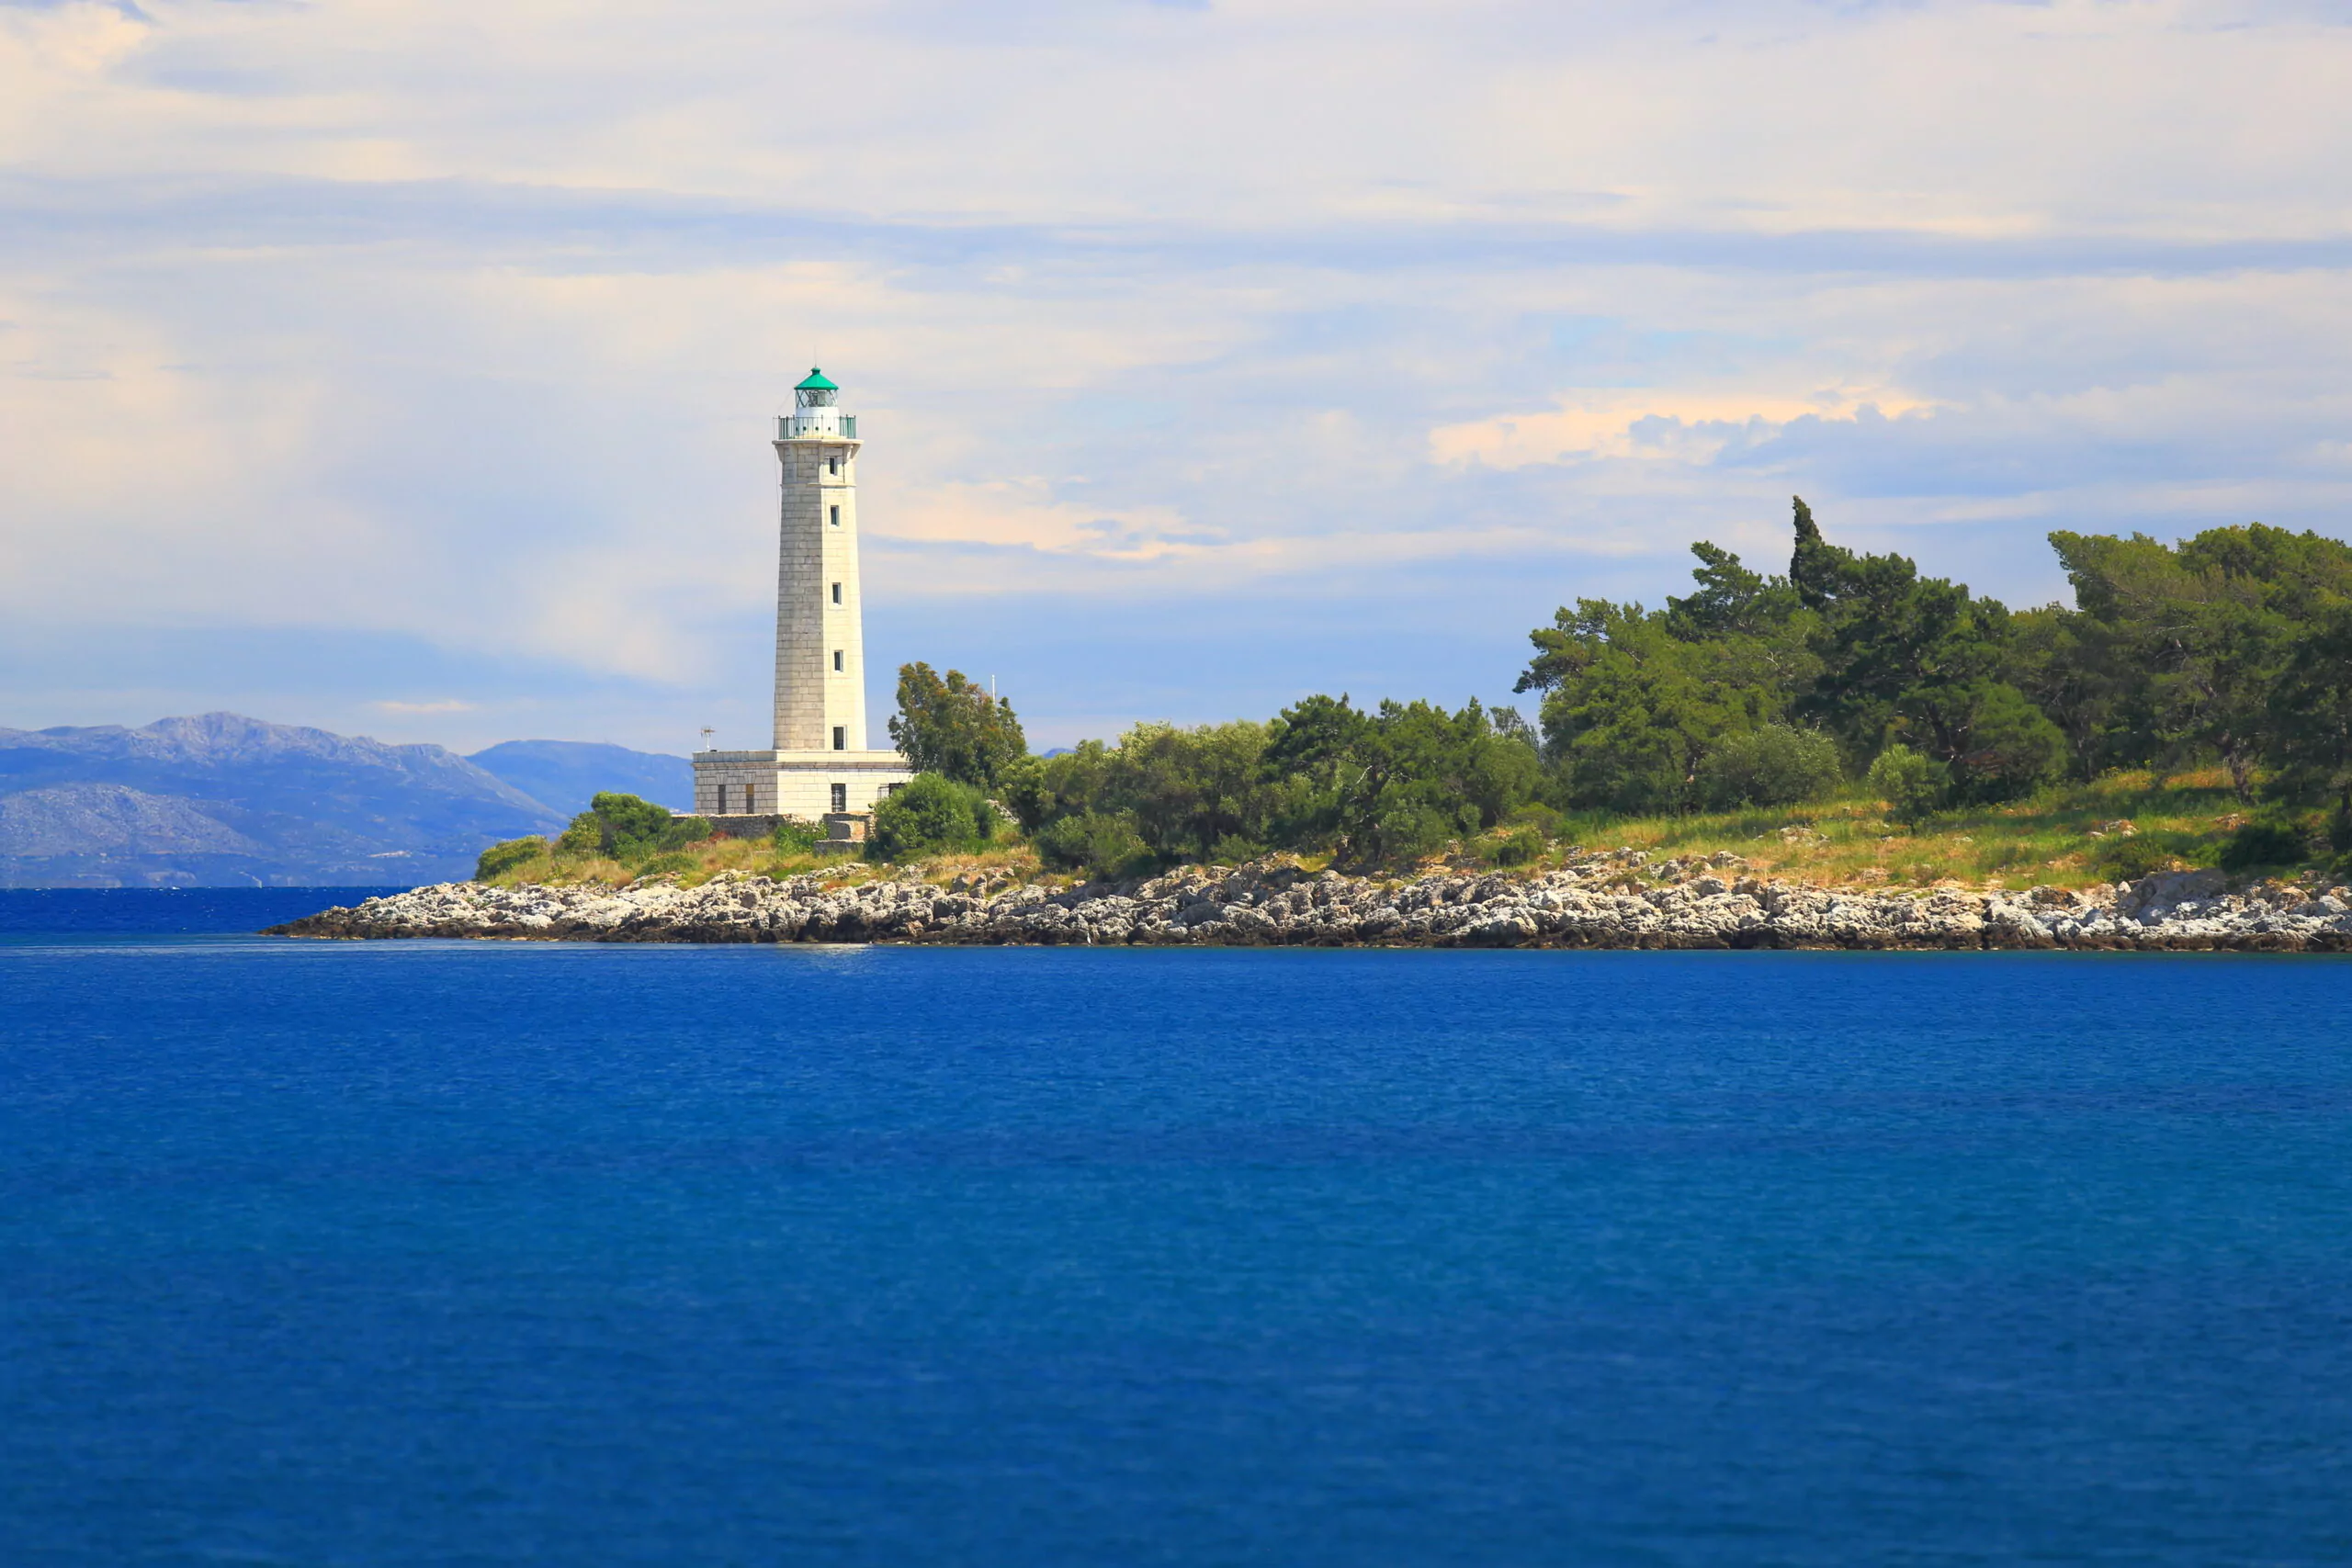 The lighthouse on Kranai Island